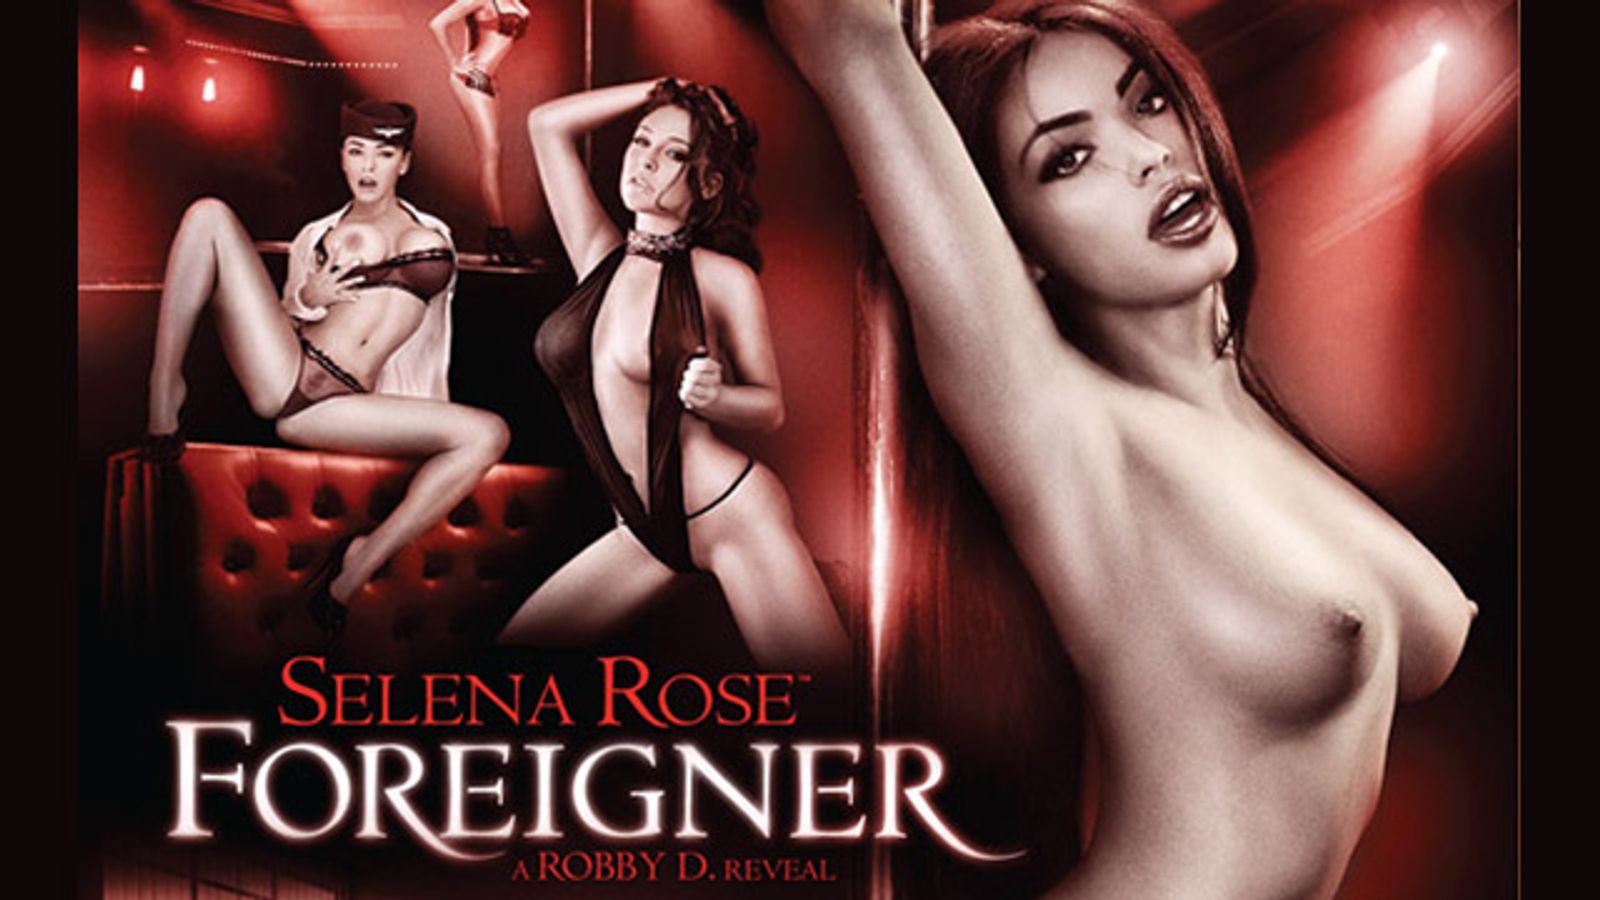 Digital Playground's 'Foreigner' Showcases Selena Rose